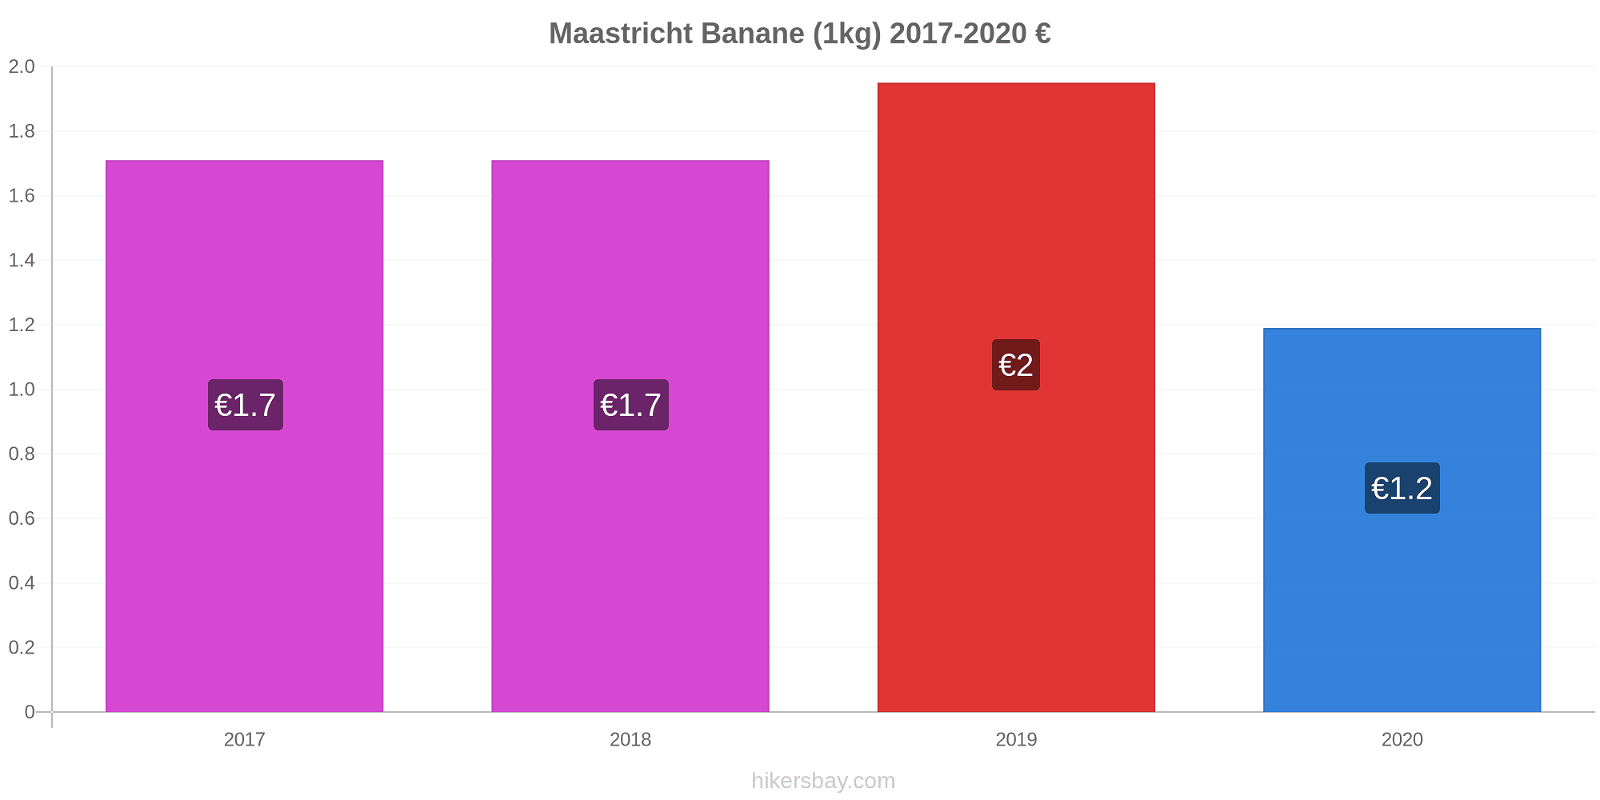 Maastricht variazioni di prezzo Banana (1kg) hikersbay.com